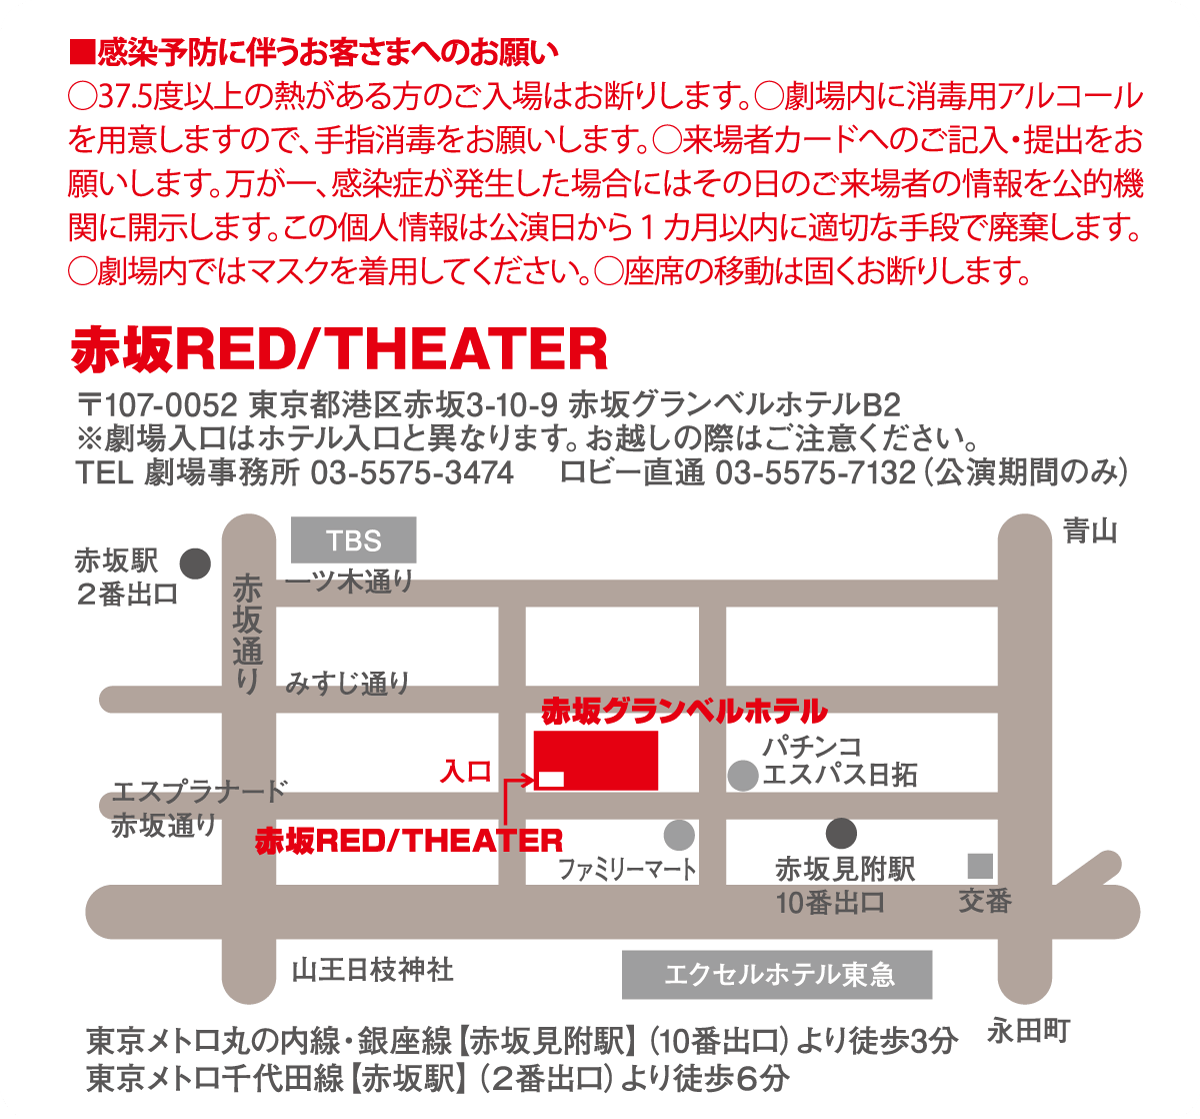 赤坂RED/THEATER 地図